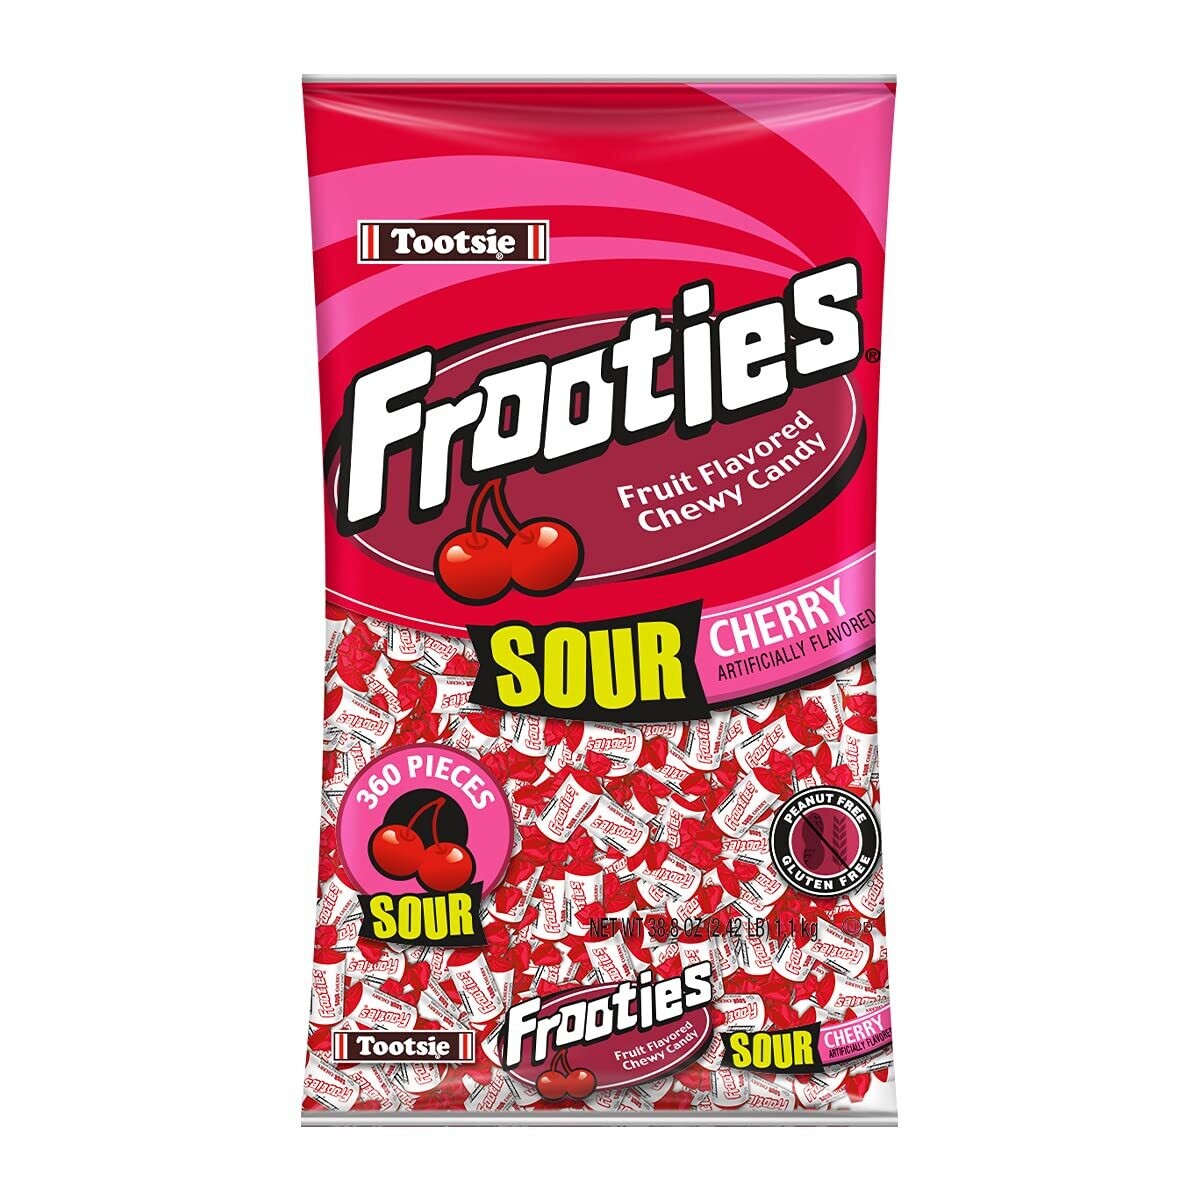 Tootsie Frooties 360ct Sour Cherry